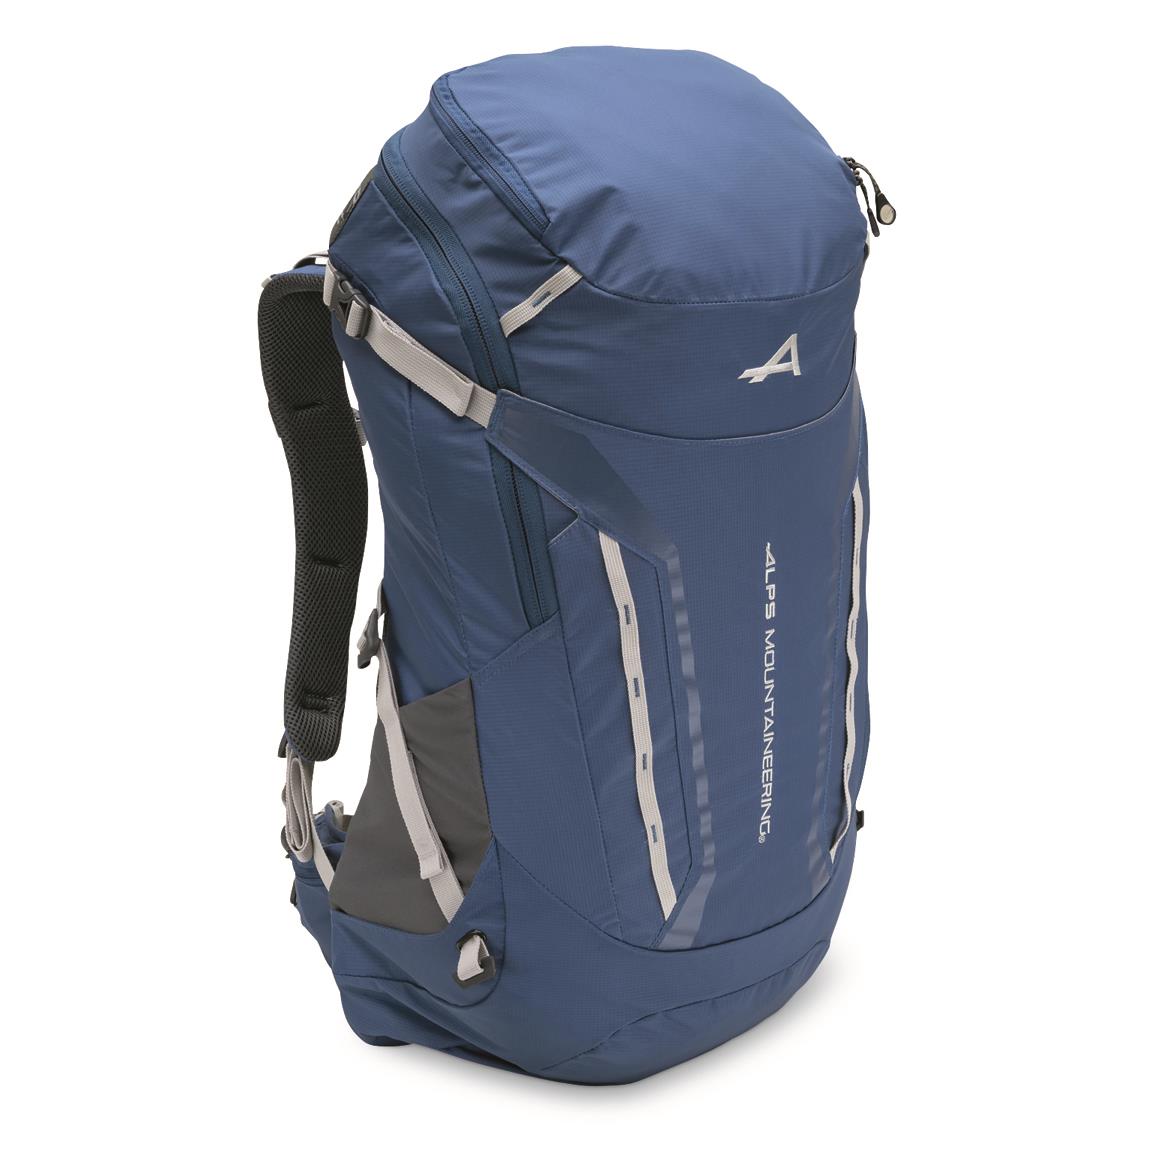 ALPS Mountaineering Baja 40 Backpack, 40 Liter, Blue/gray